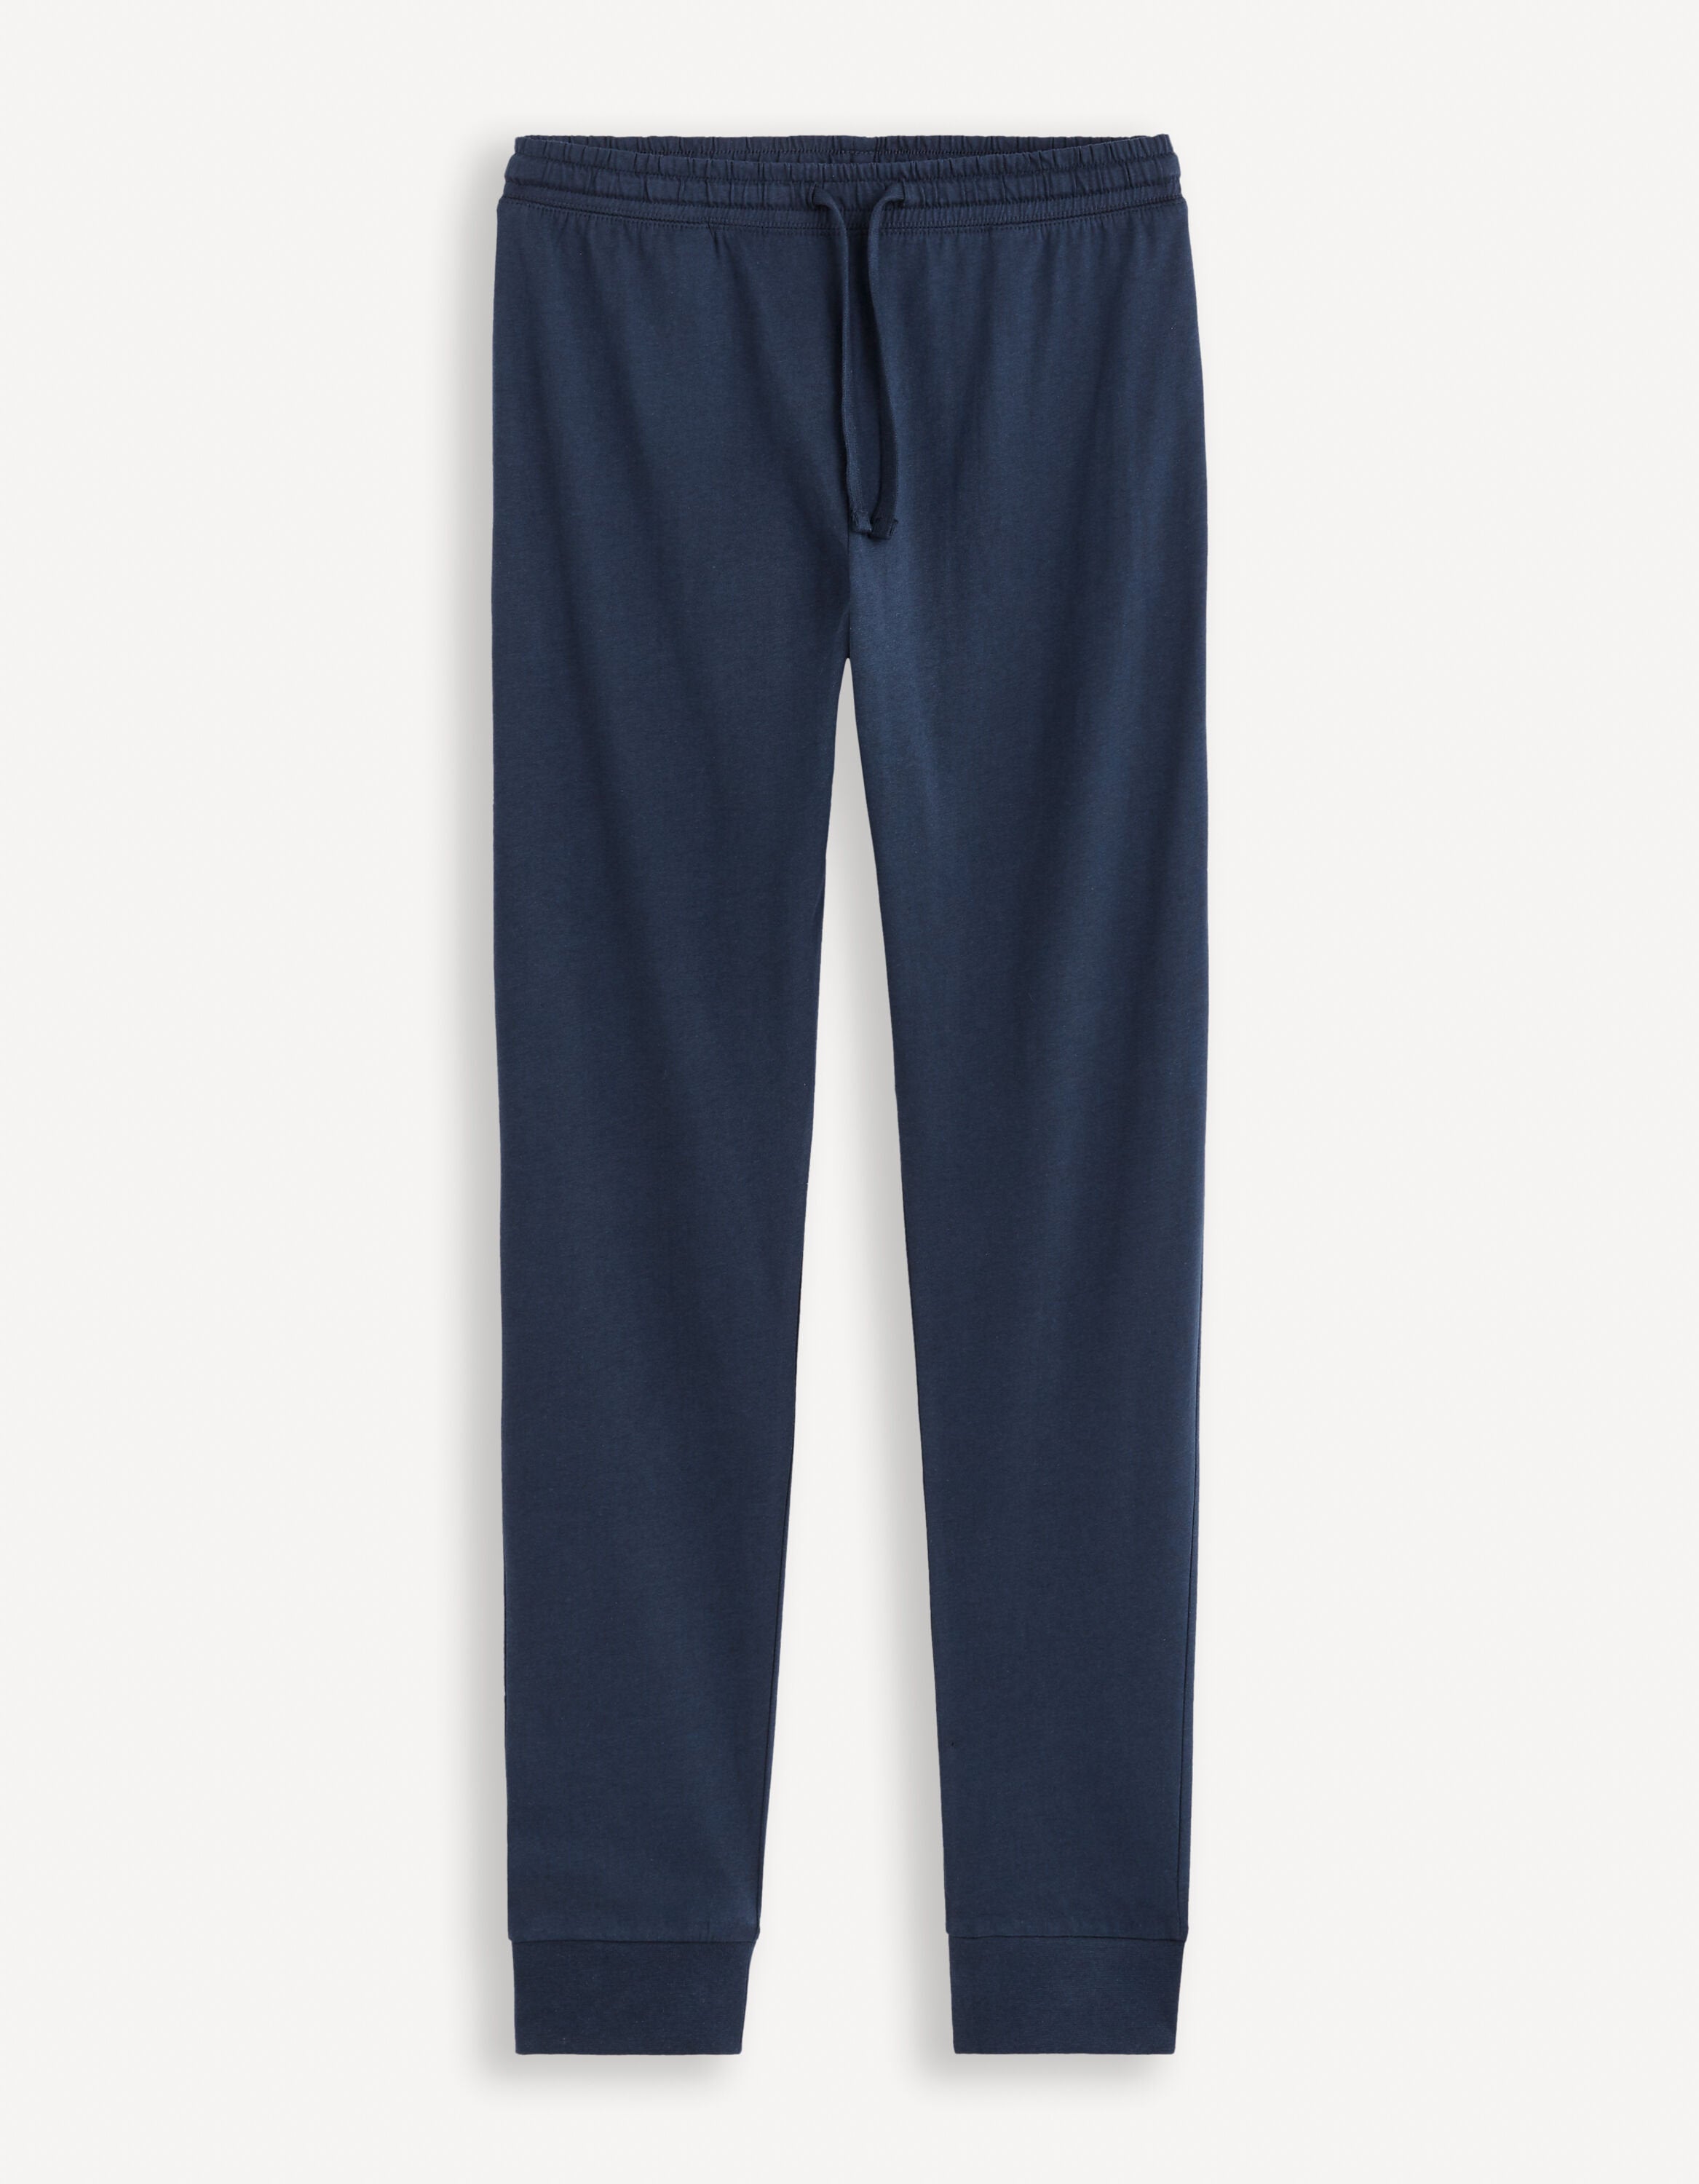 Long-Sleeved Pajamas And Pants - Navy_FIPYGOODN_NAVY_04